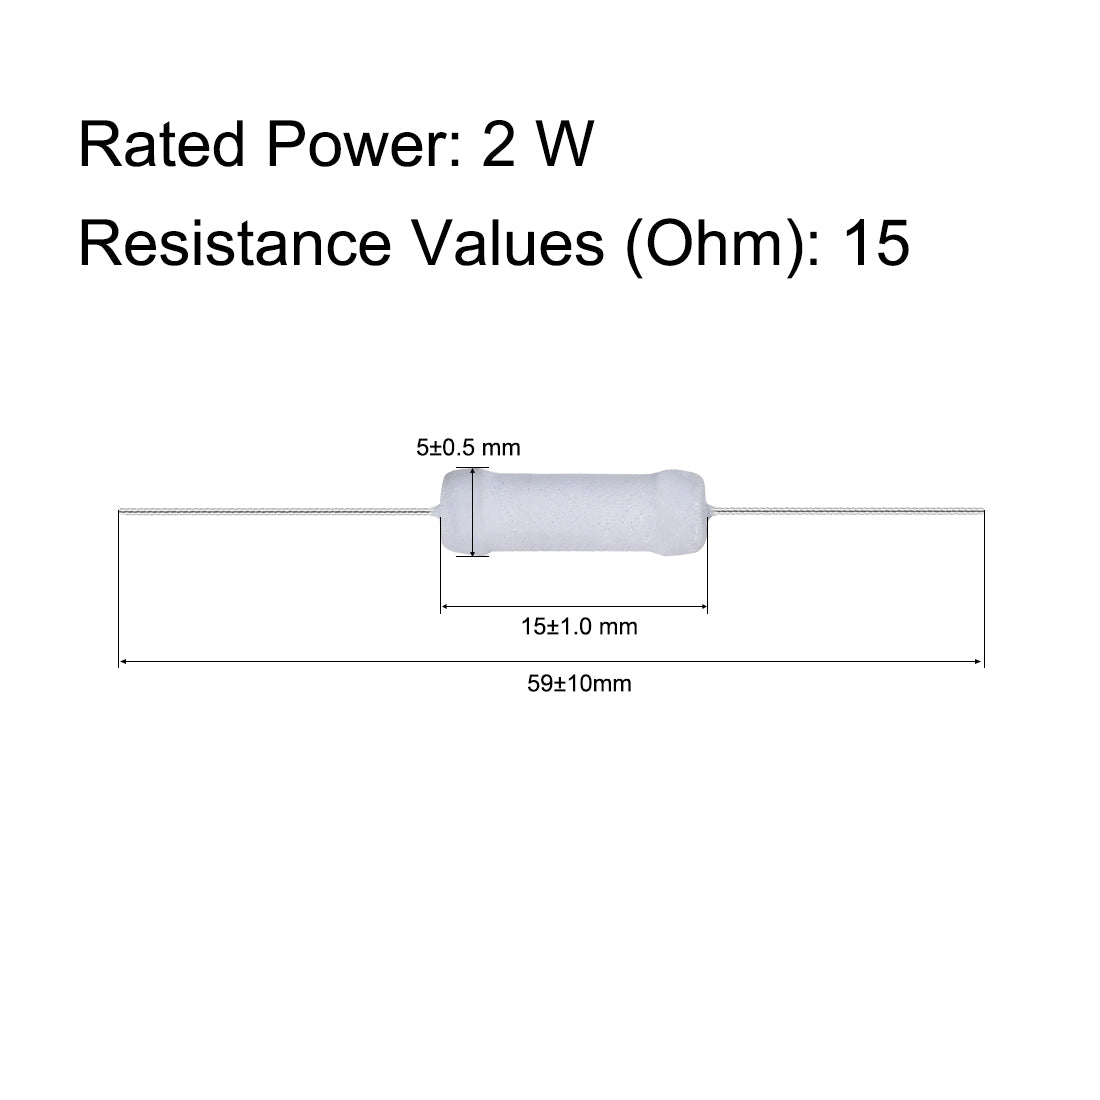 uxcell Uxcell 60pcs 2W 2 Watt Metal Oxide Film Resistor Axile Lead 15 Ohm ±5% Tolerance